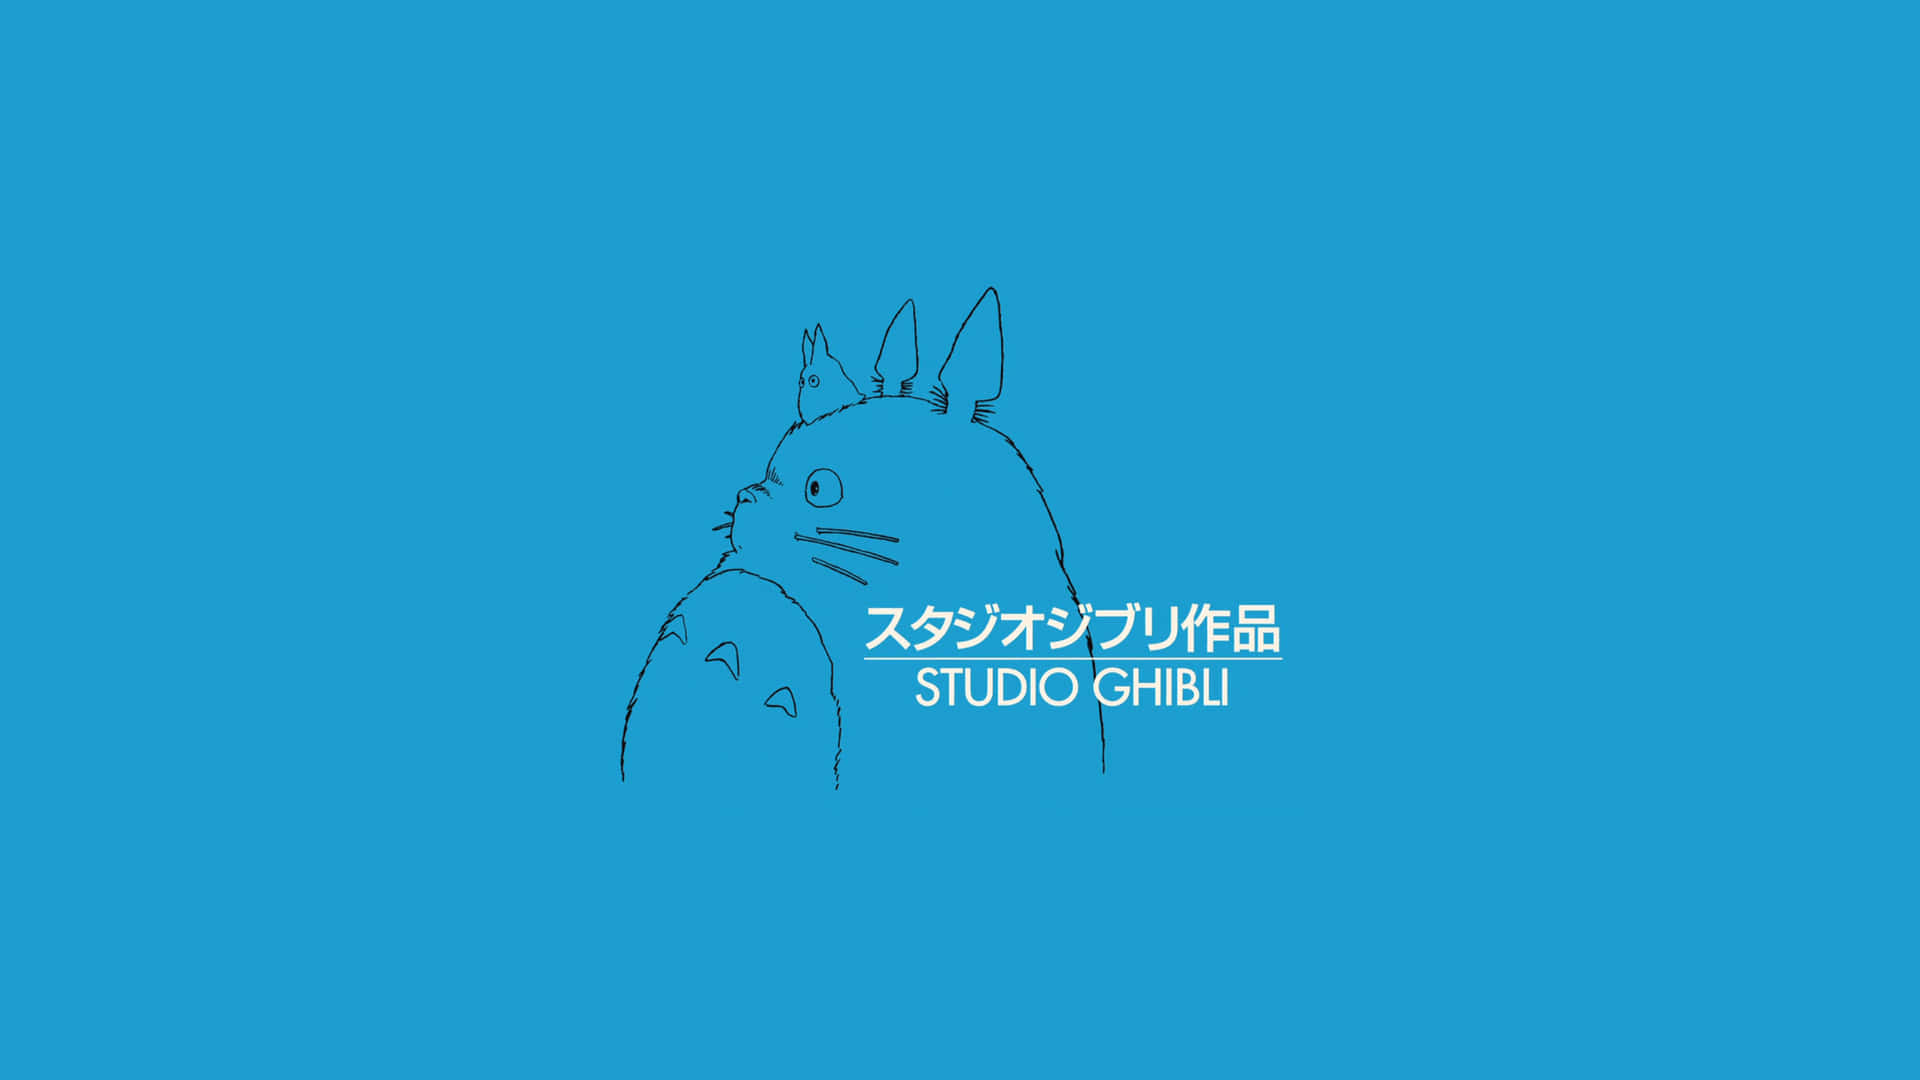 Enchanting Studio Ghibli Art Depicting Fantastical World and Characters Wallpaper